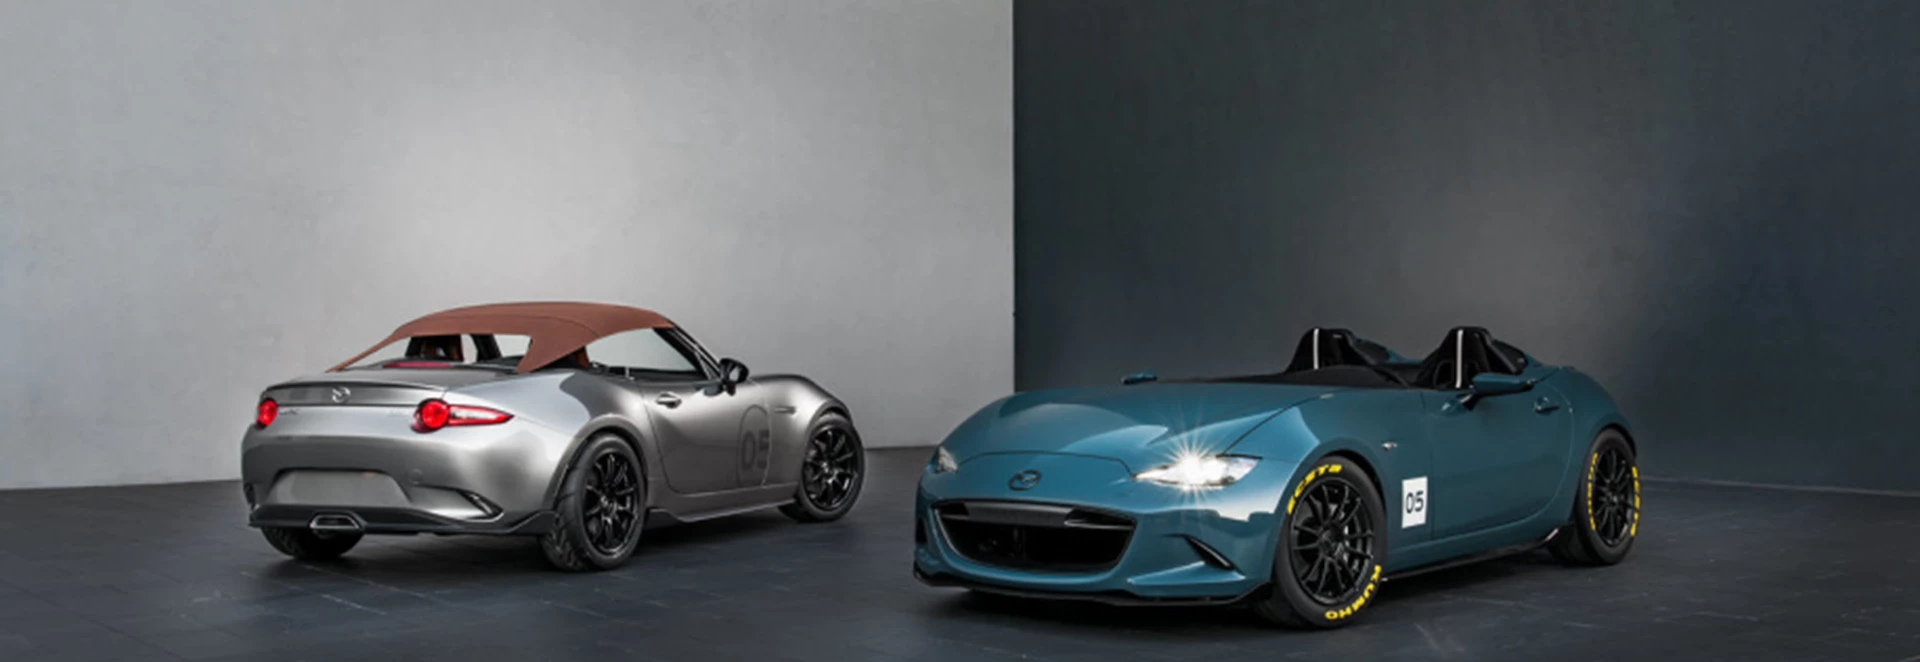 Mazda showcases lightweight MX-5 concepts